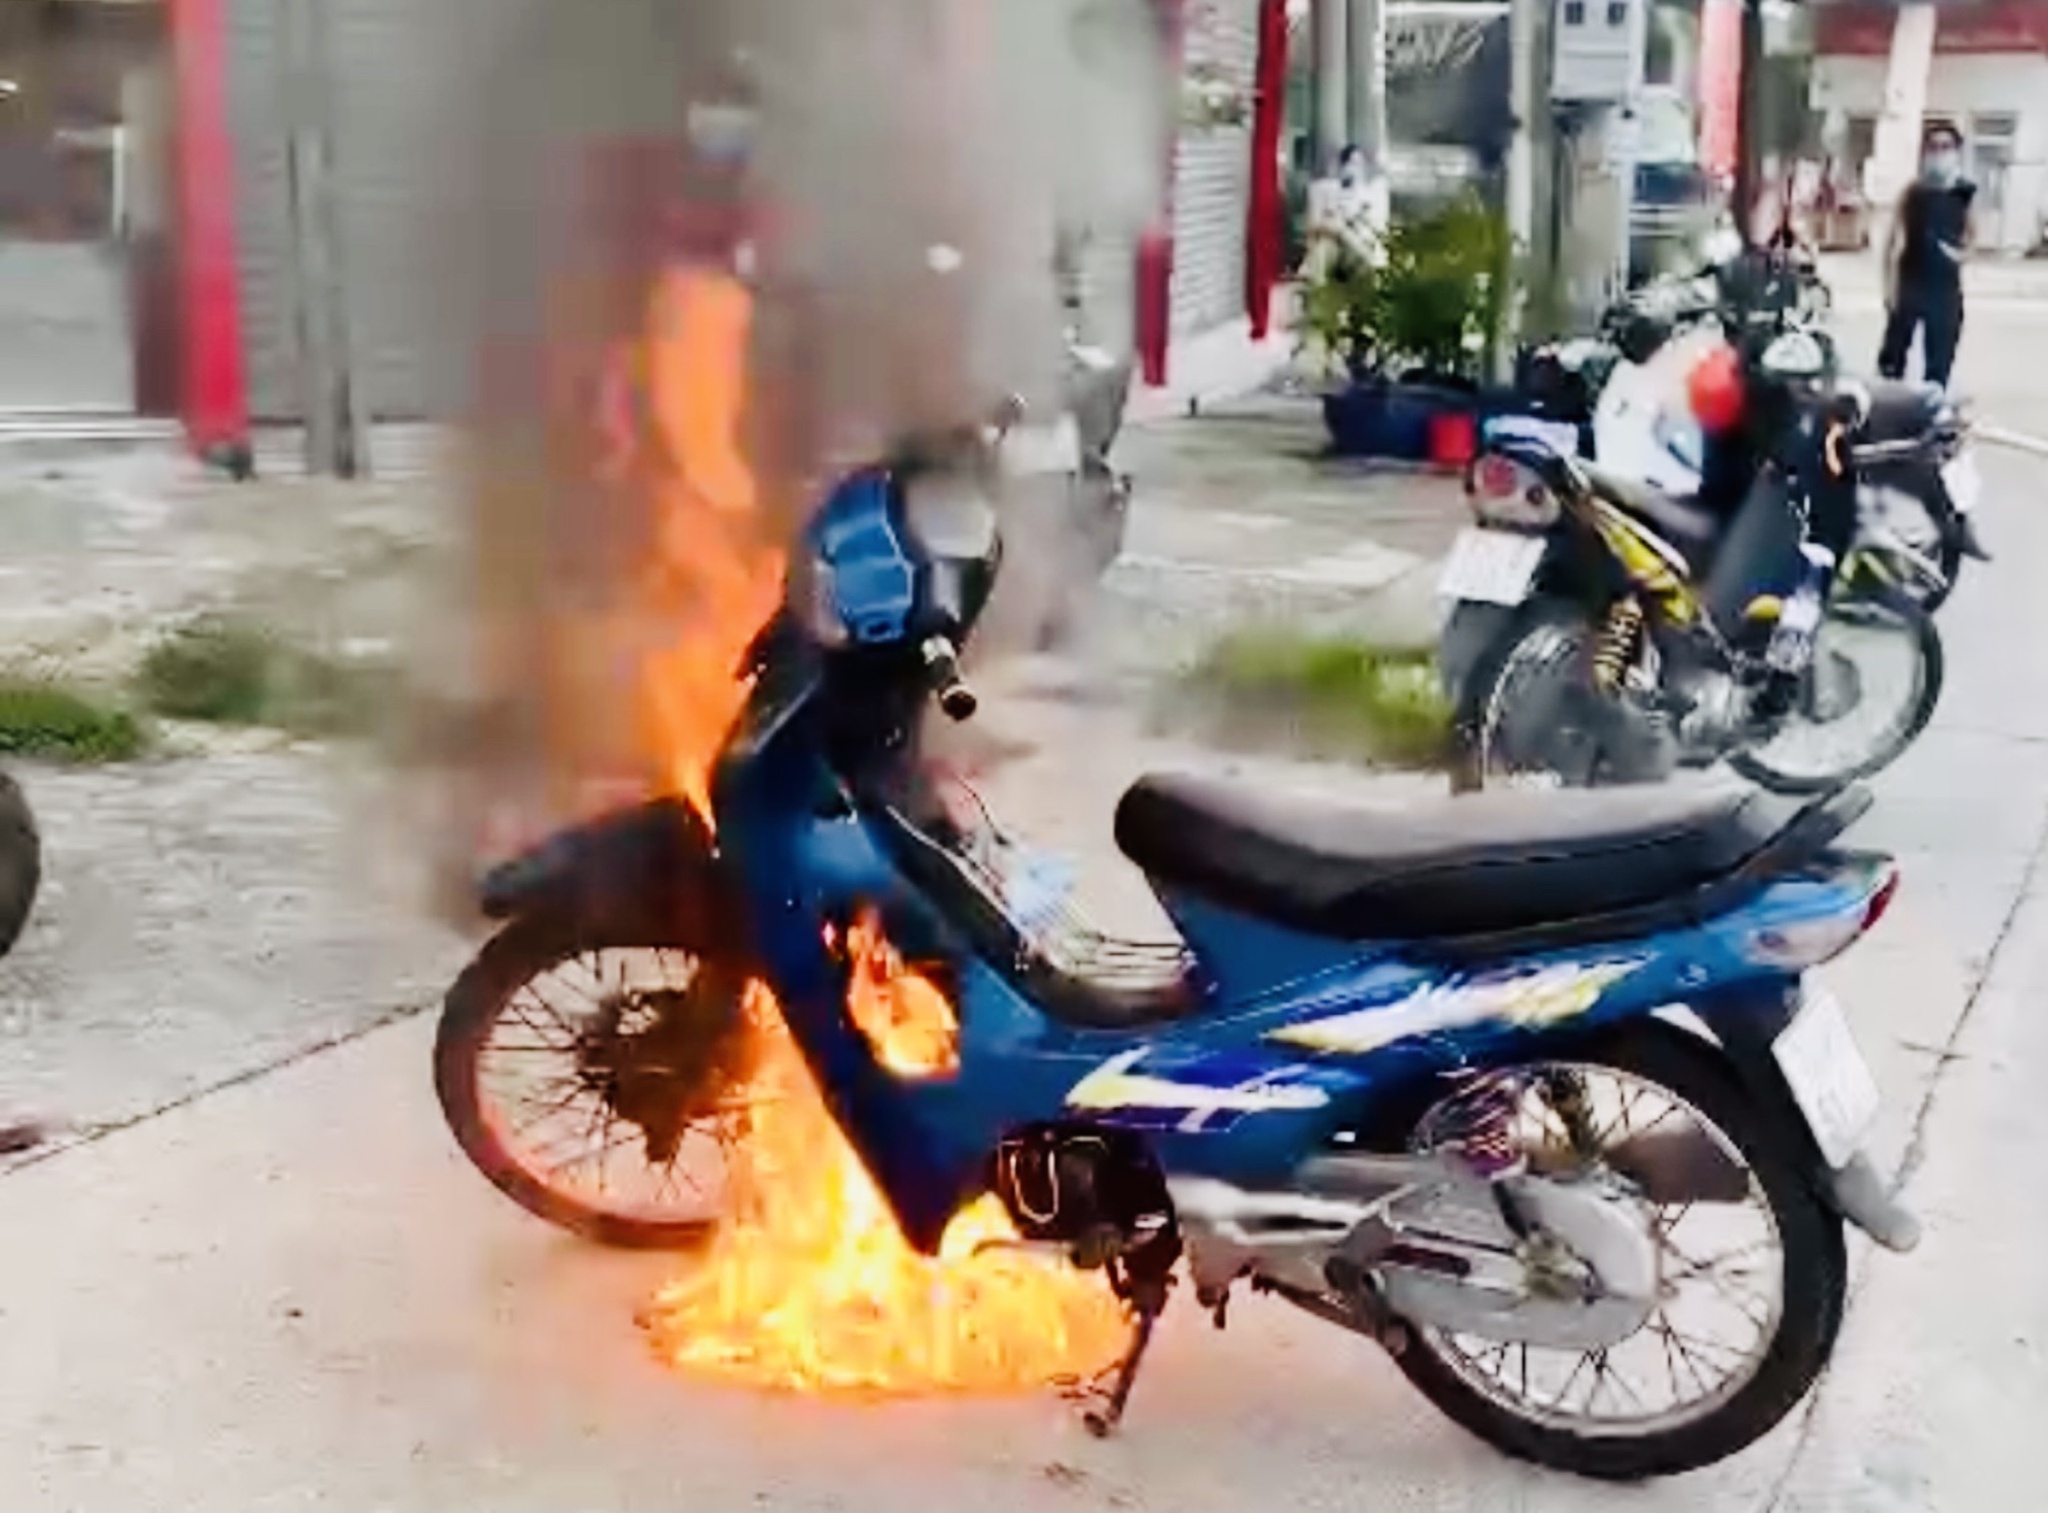 man torches bike